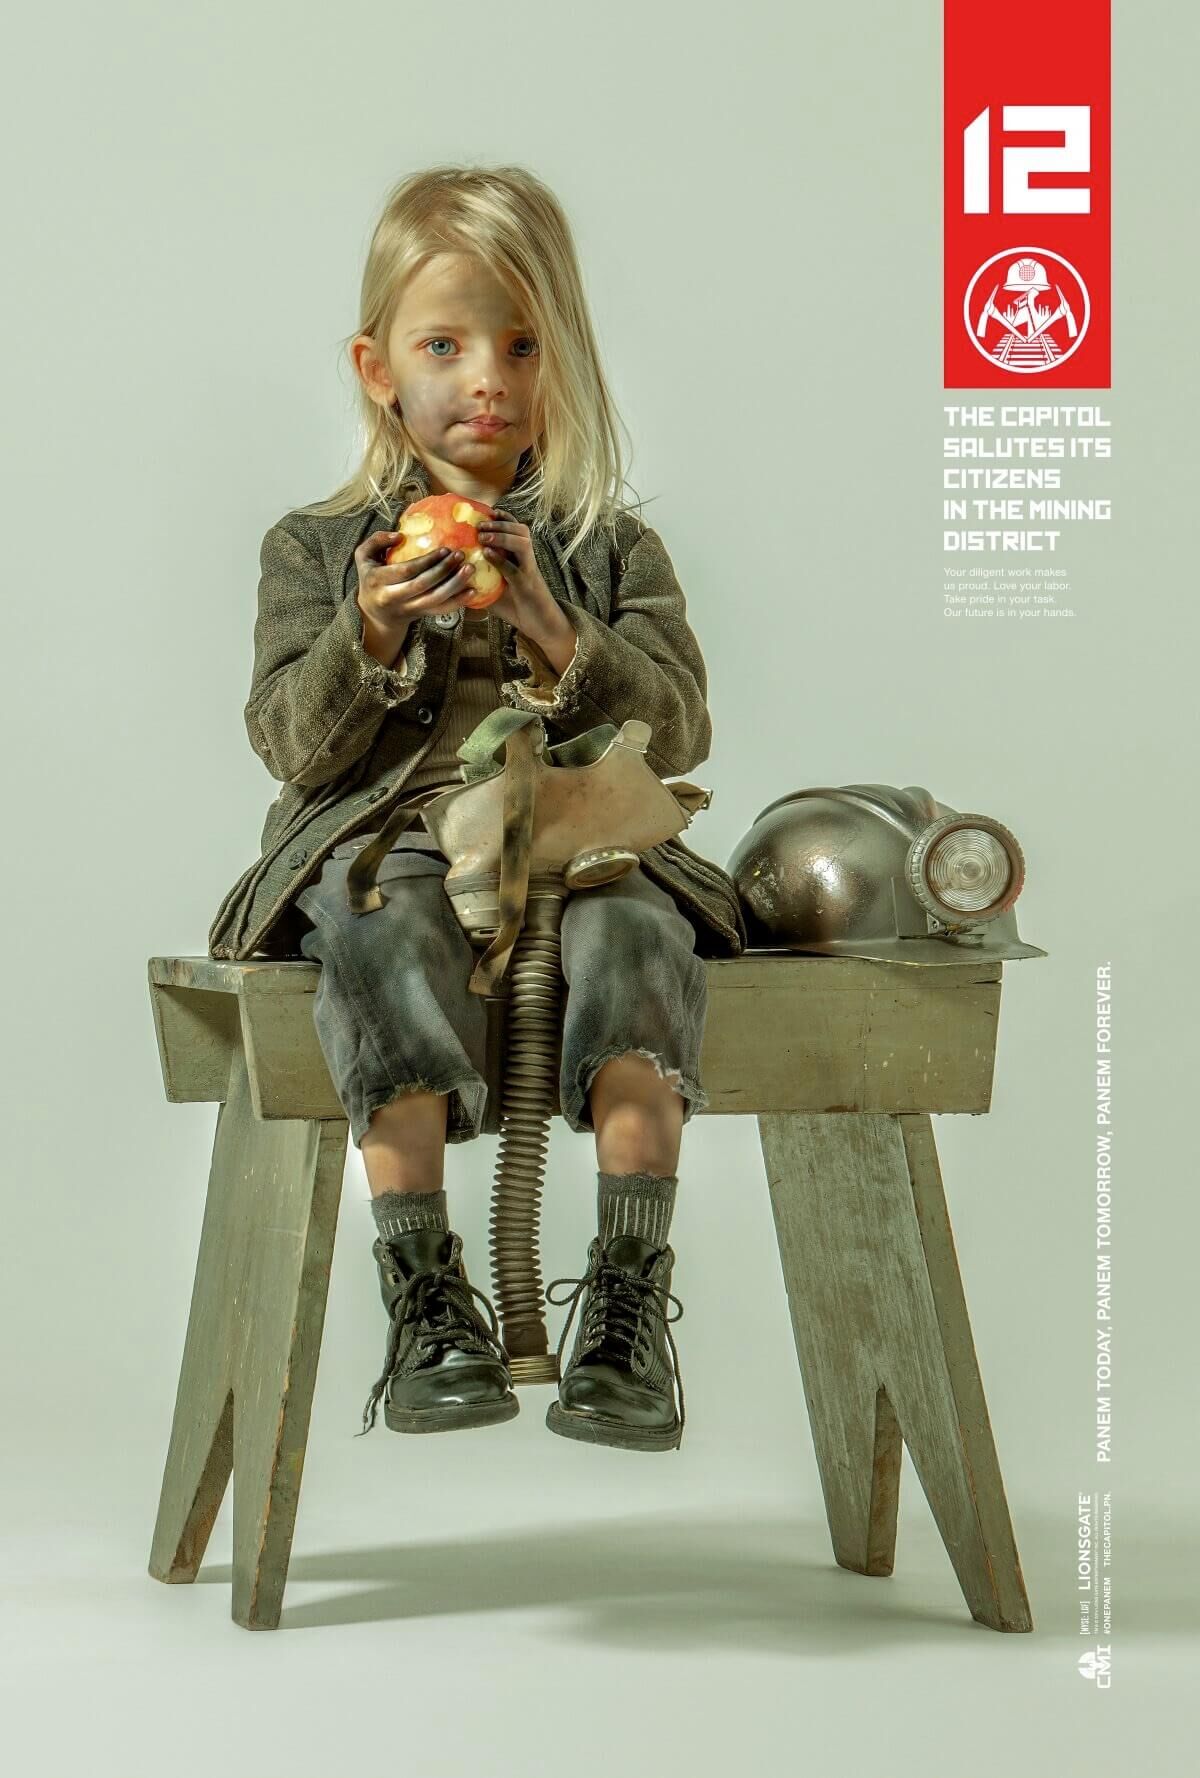 Hunger-Games-Mockingjay-Part-1-ad-poster